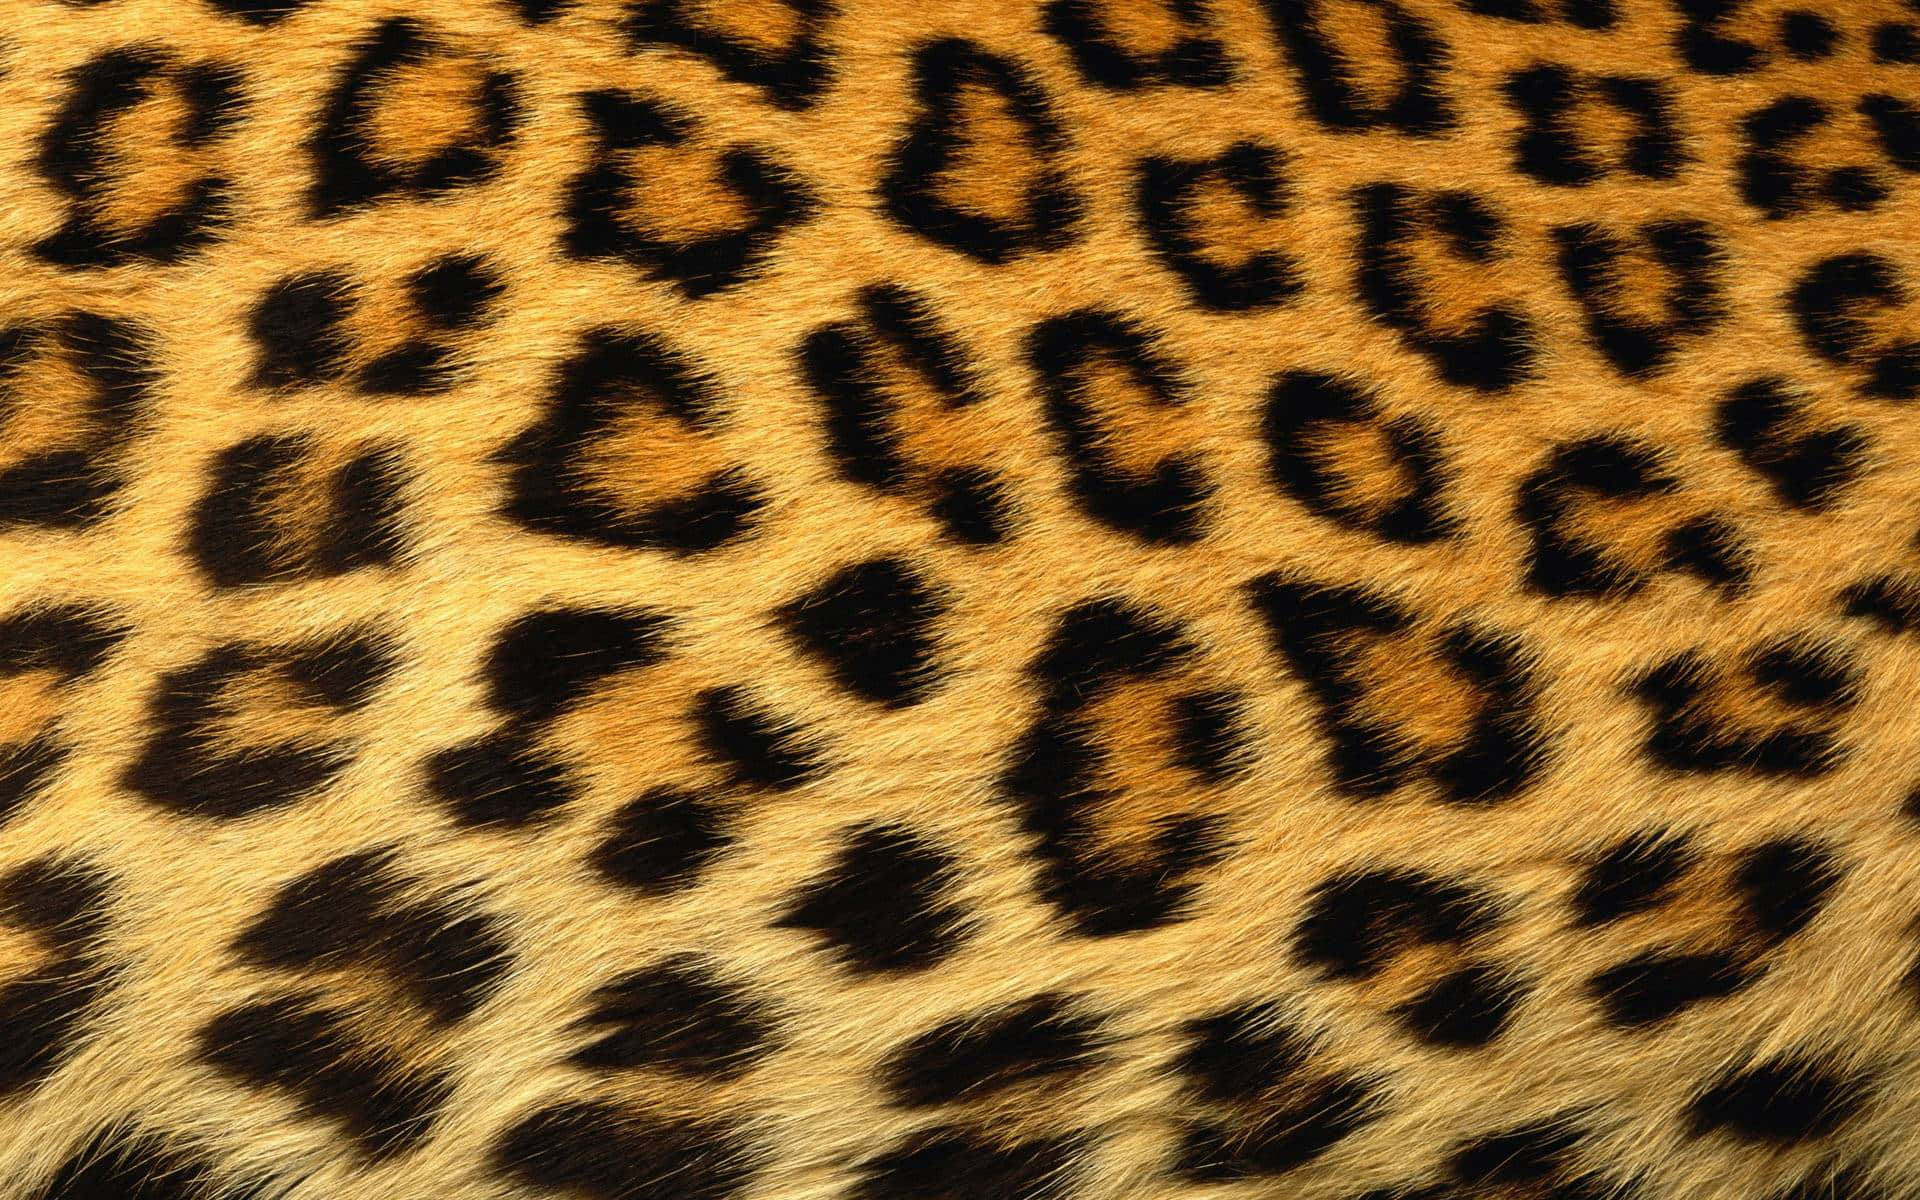 Blurred Cute Cheetah Print Pattern Wallpaper